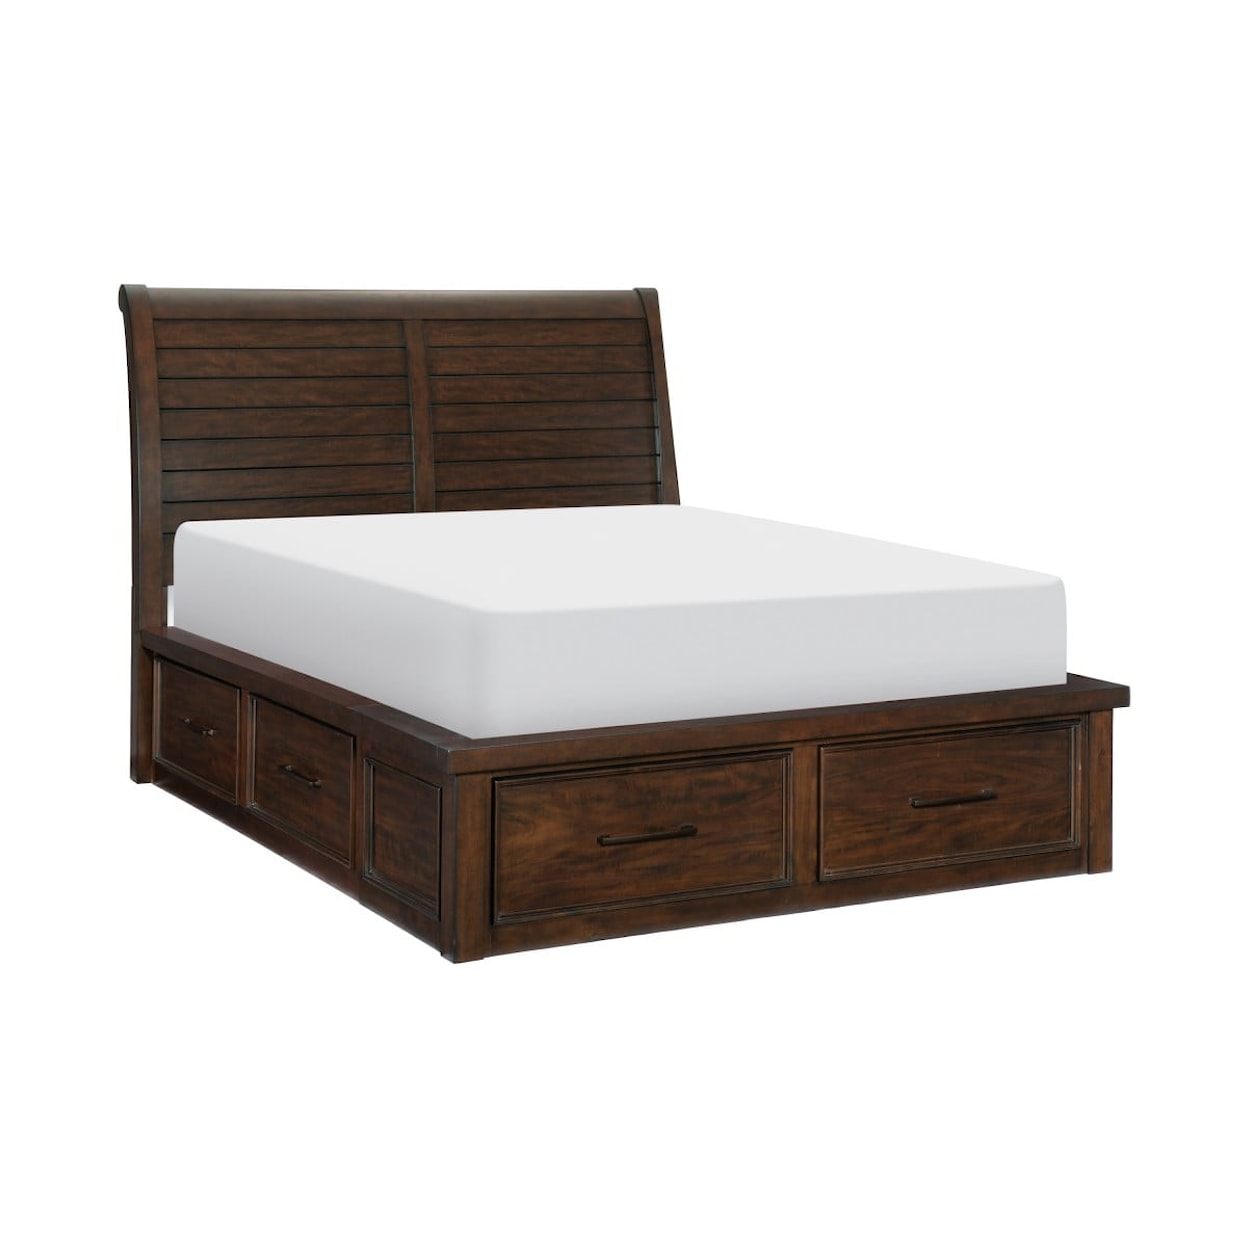 Homelegance Furniture Logandale CA King  Bed with FB Storage